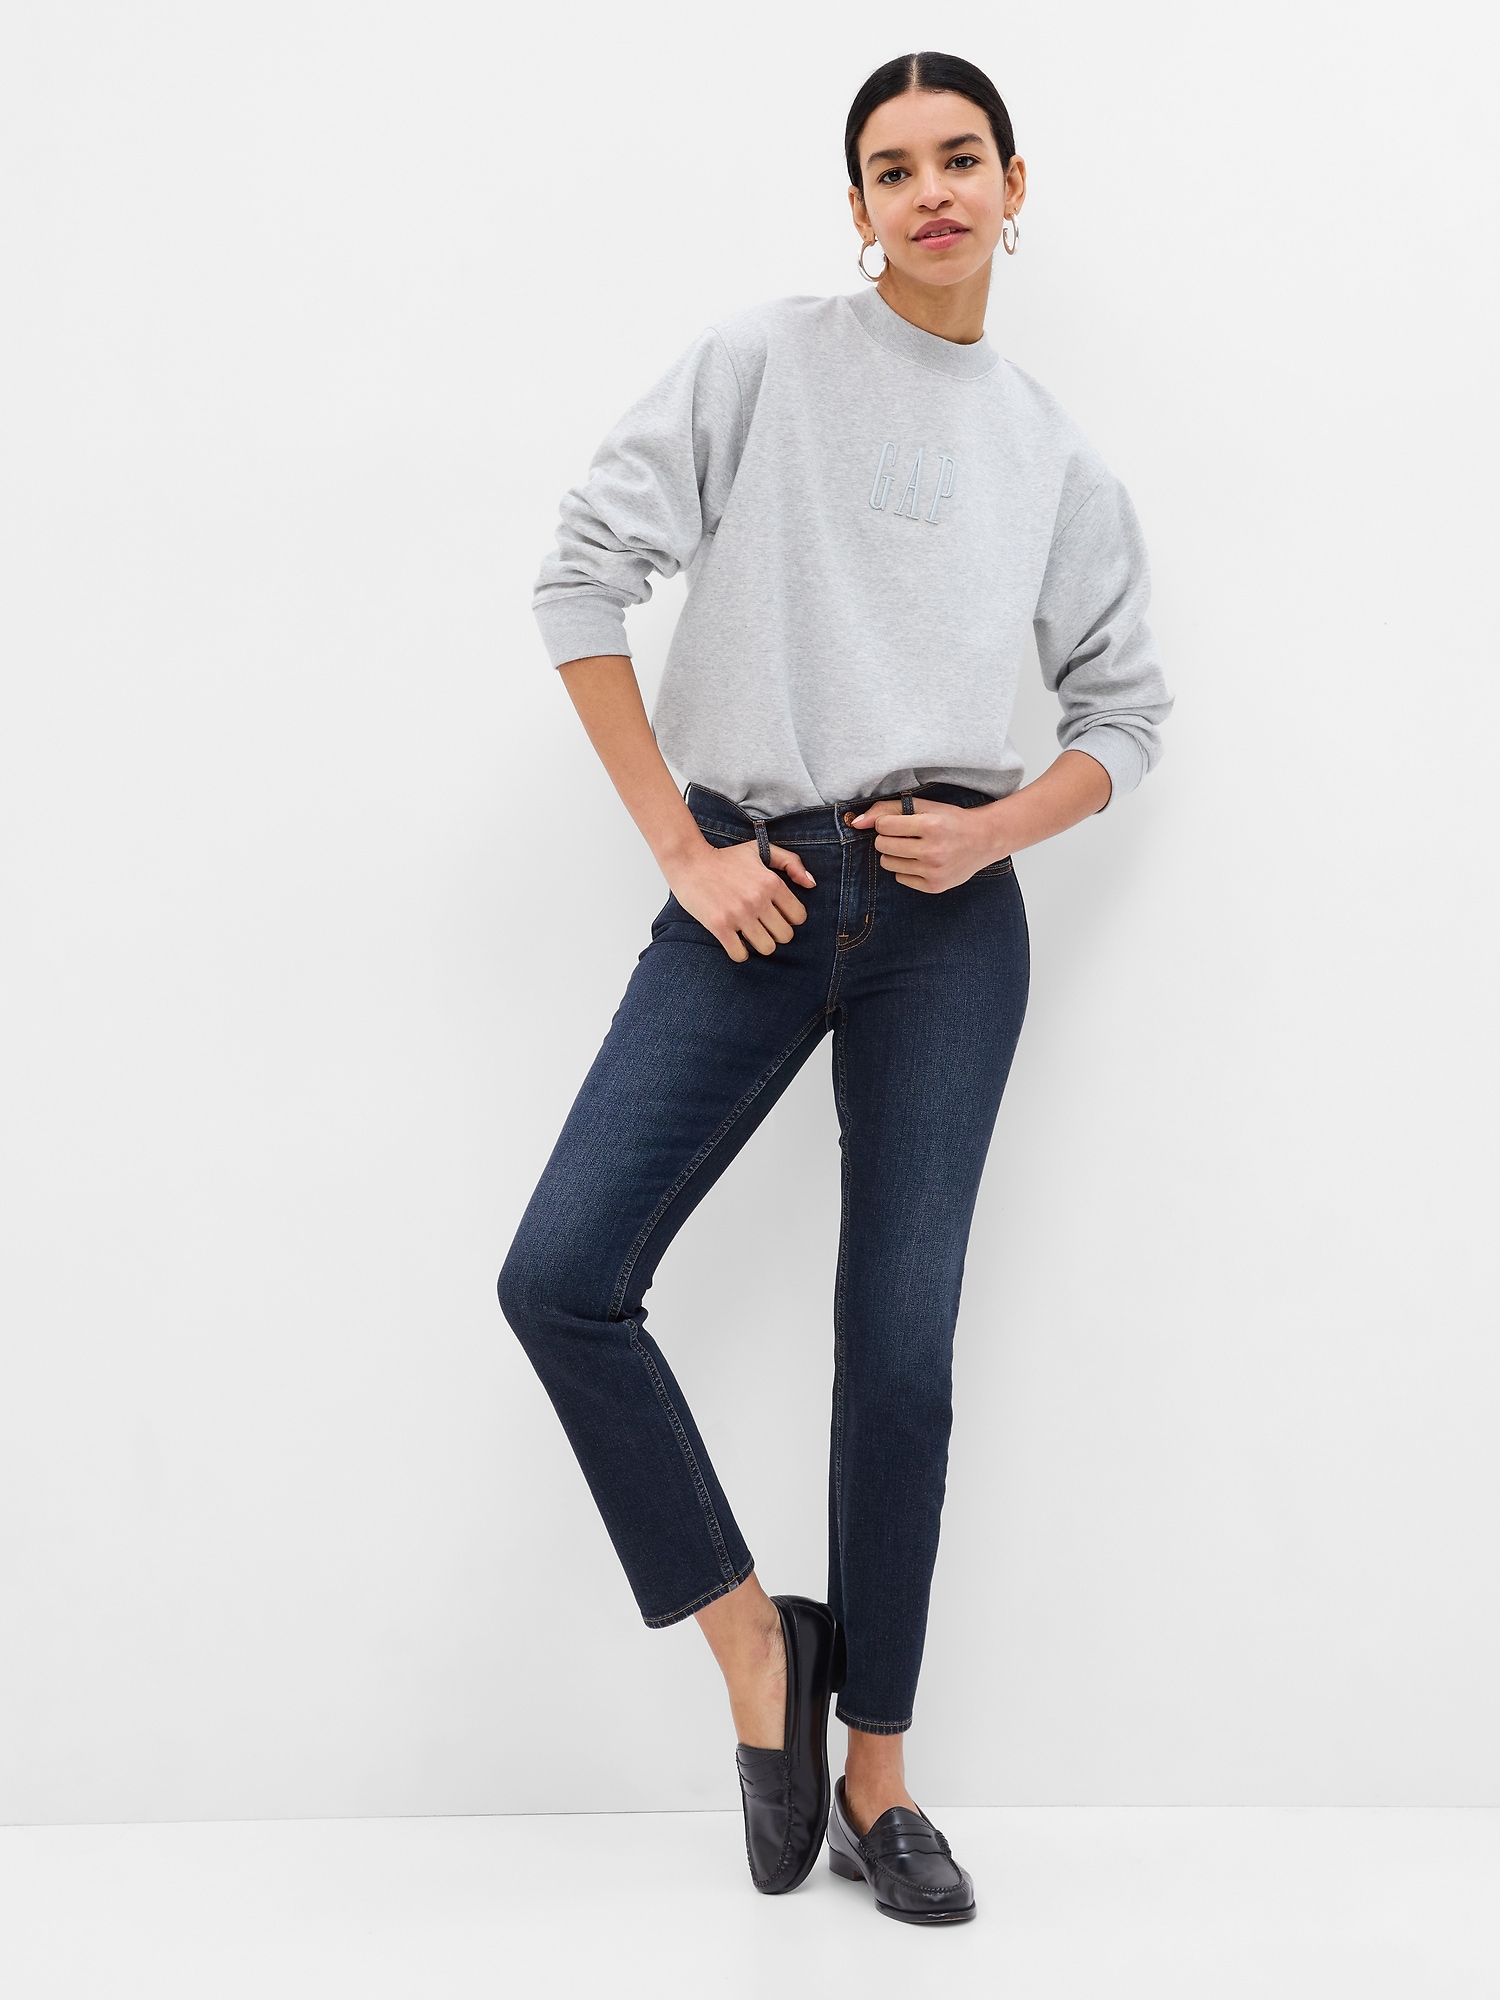 Womens plus jeans by Gap, low rise boot cut, size 14/16 long, EUC